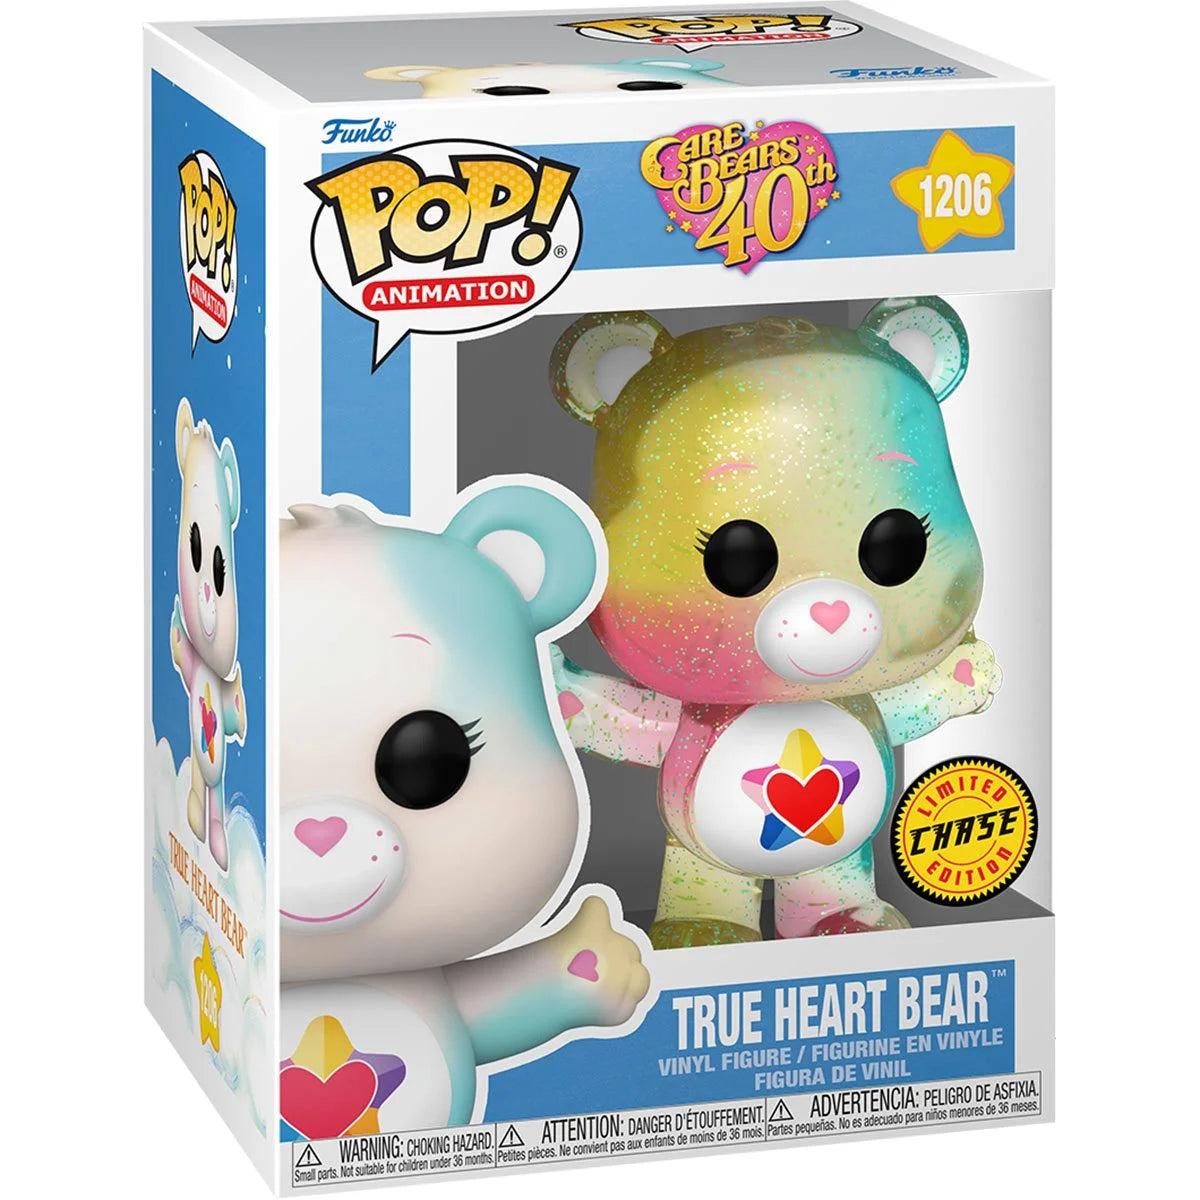 True Heart Bear Care Bears 40th Anniversary Pop! Vinyl Figure